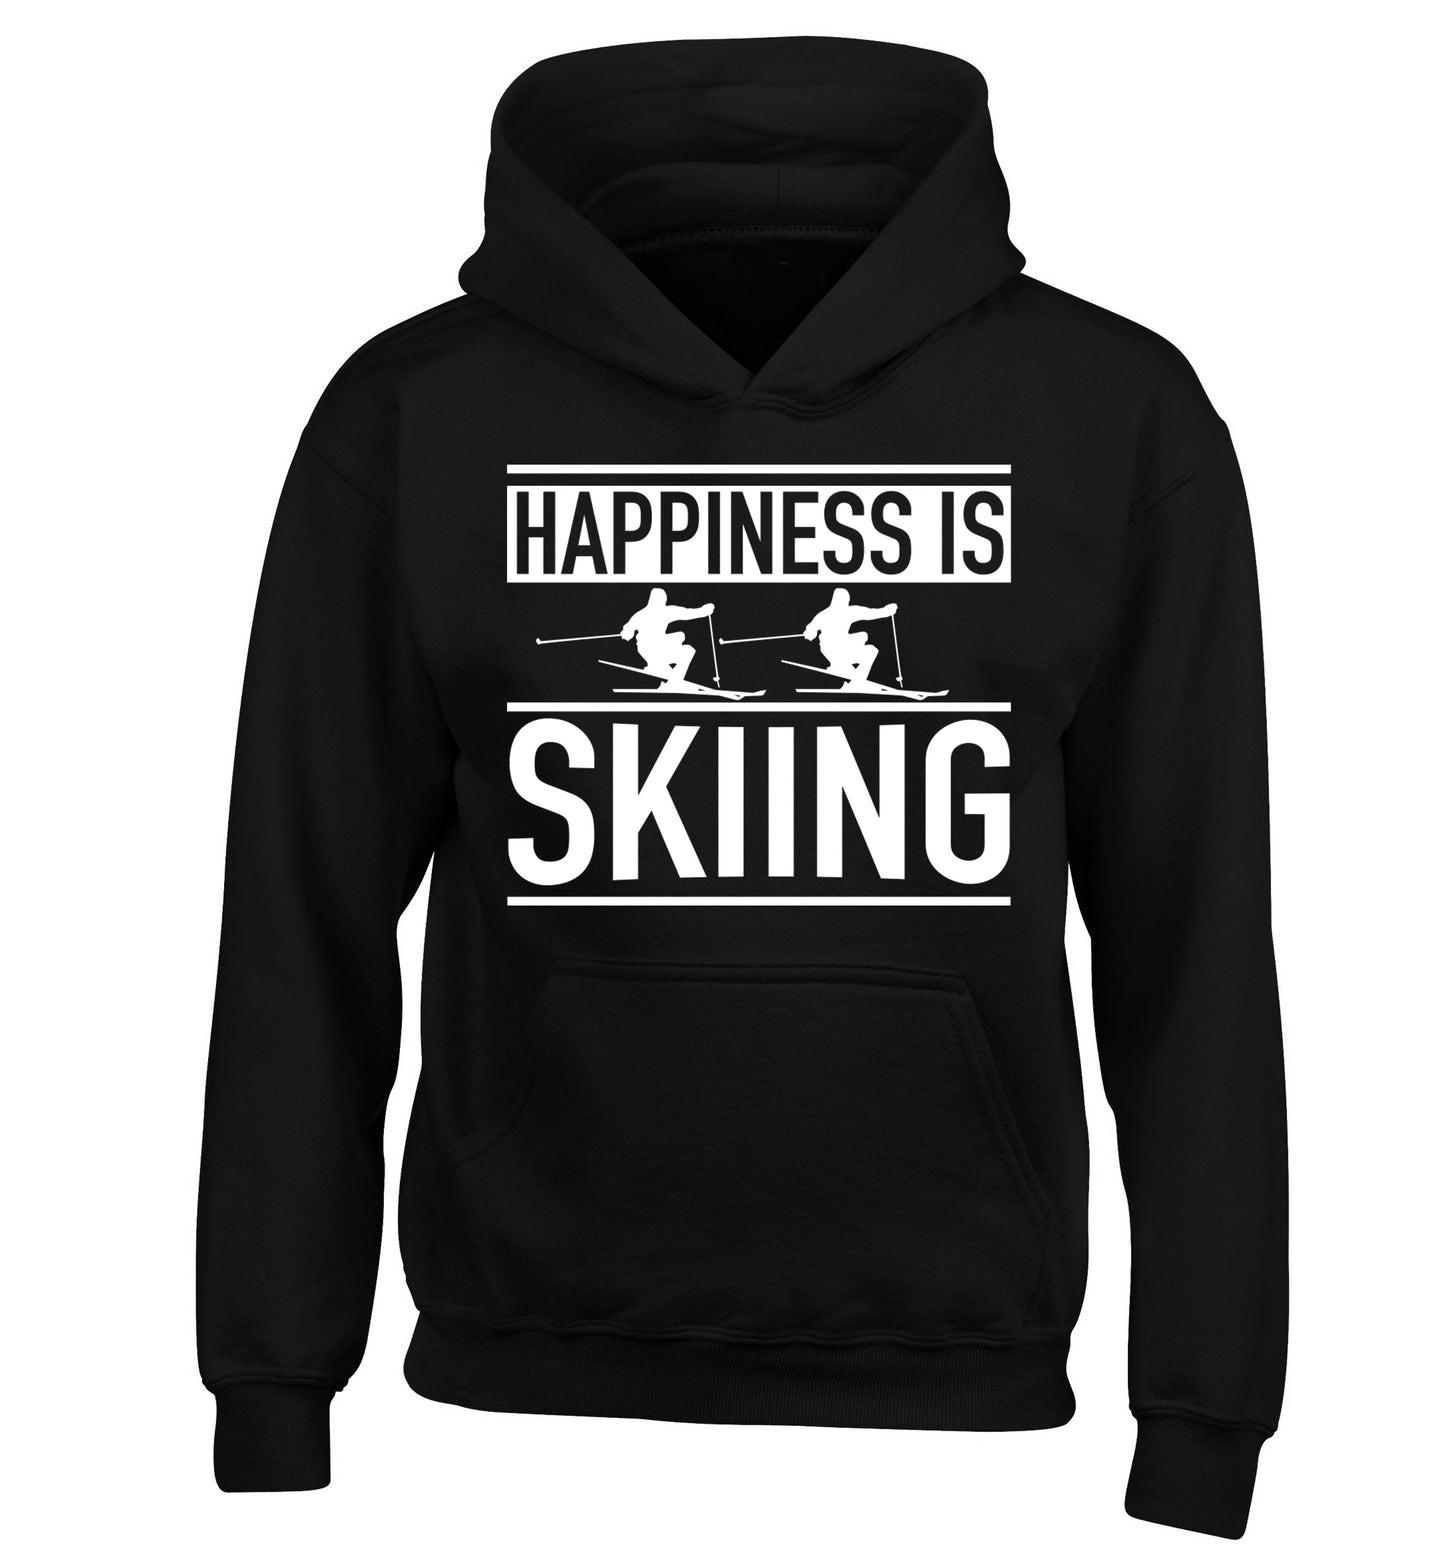 Happiness is skiing children's black hoodie 12-14 Years